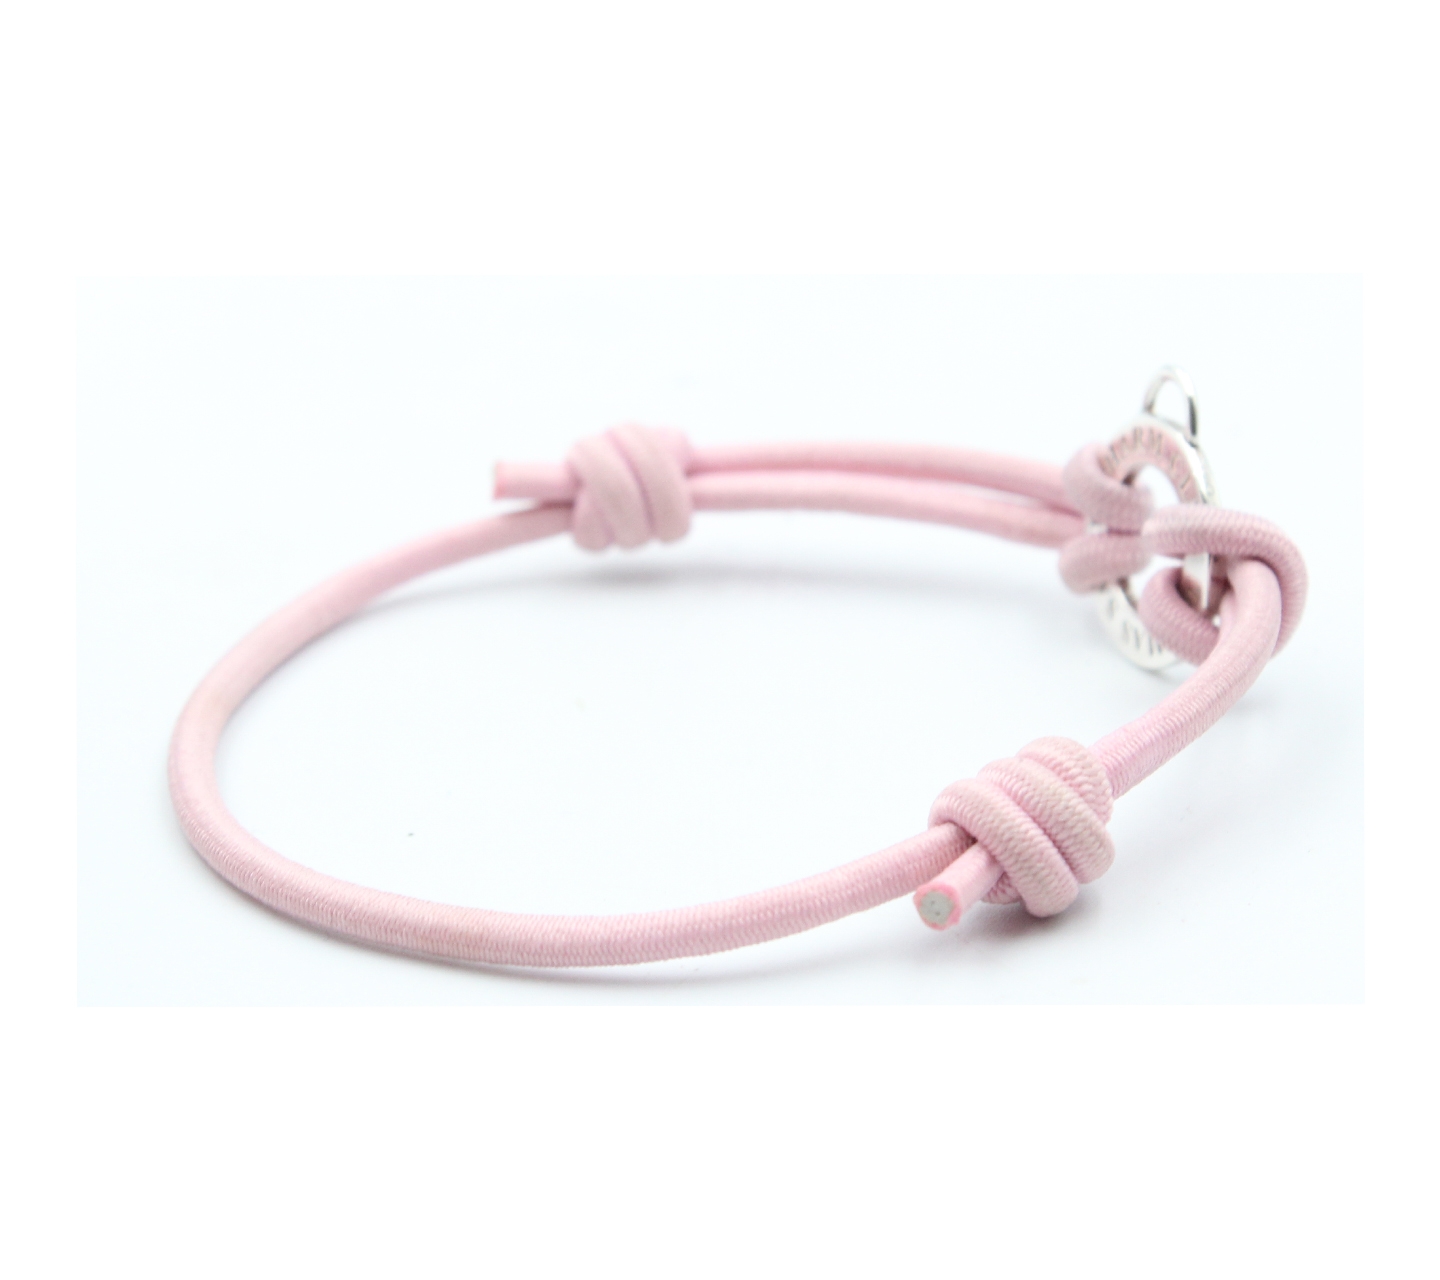 Thomas Sabo Pink Strap Bracelet Jewelry